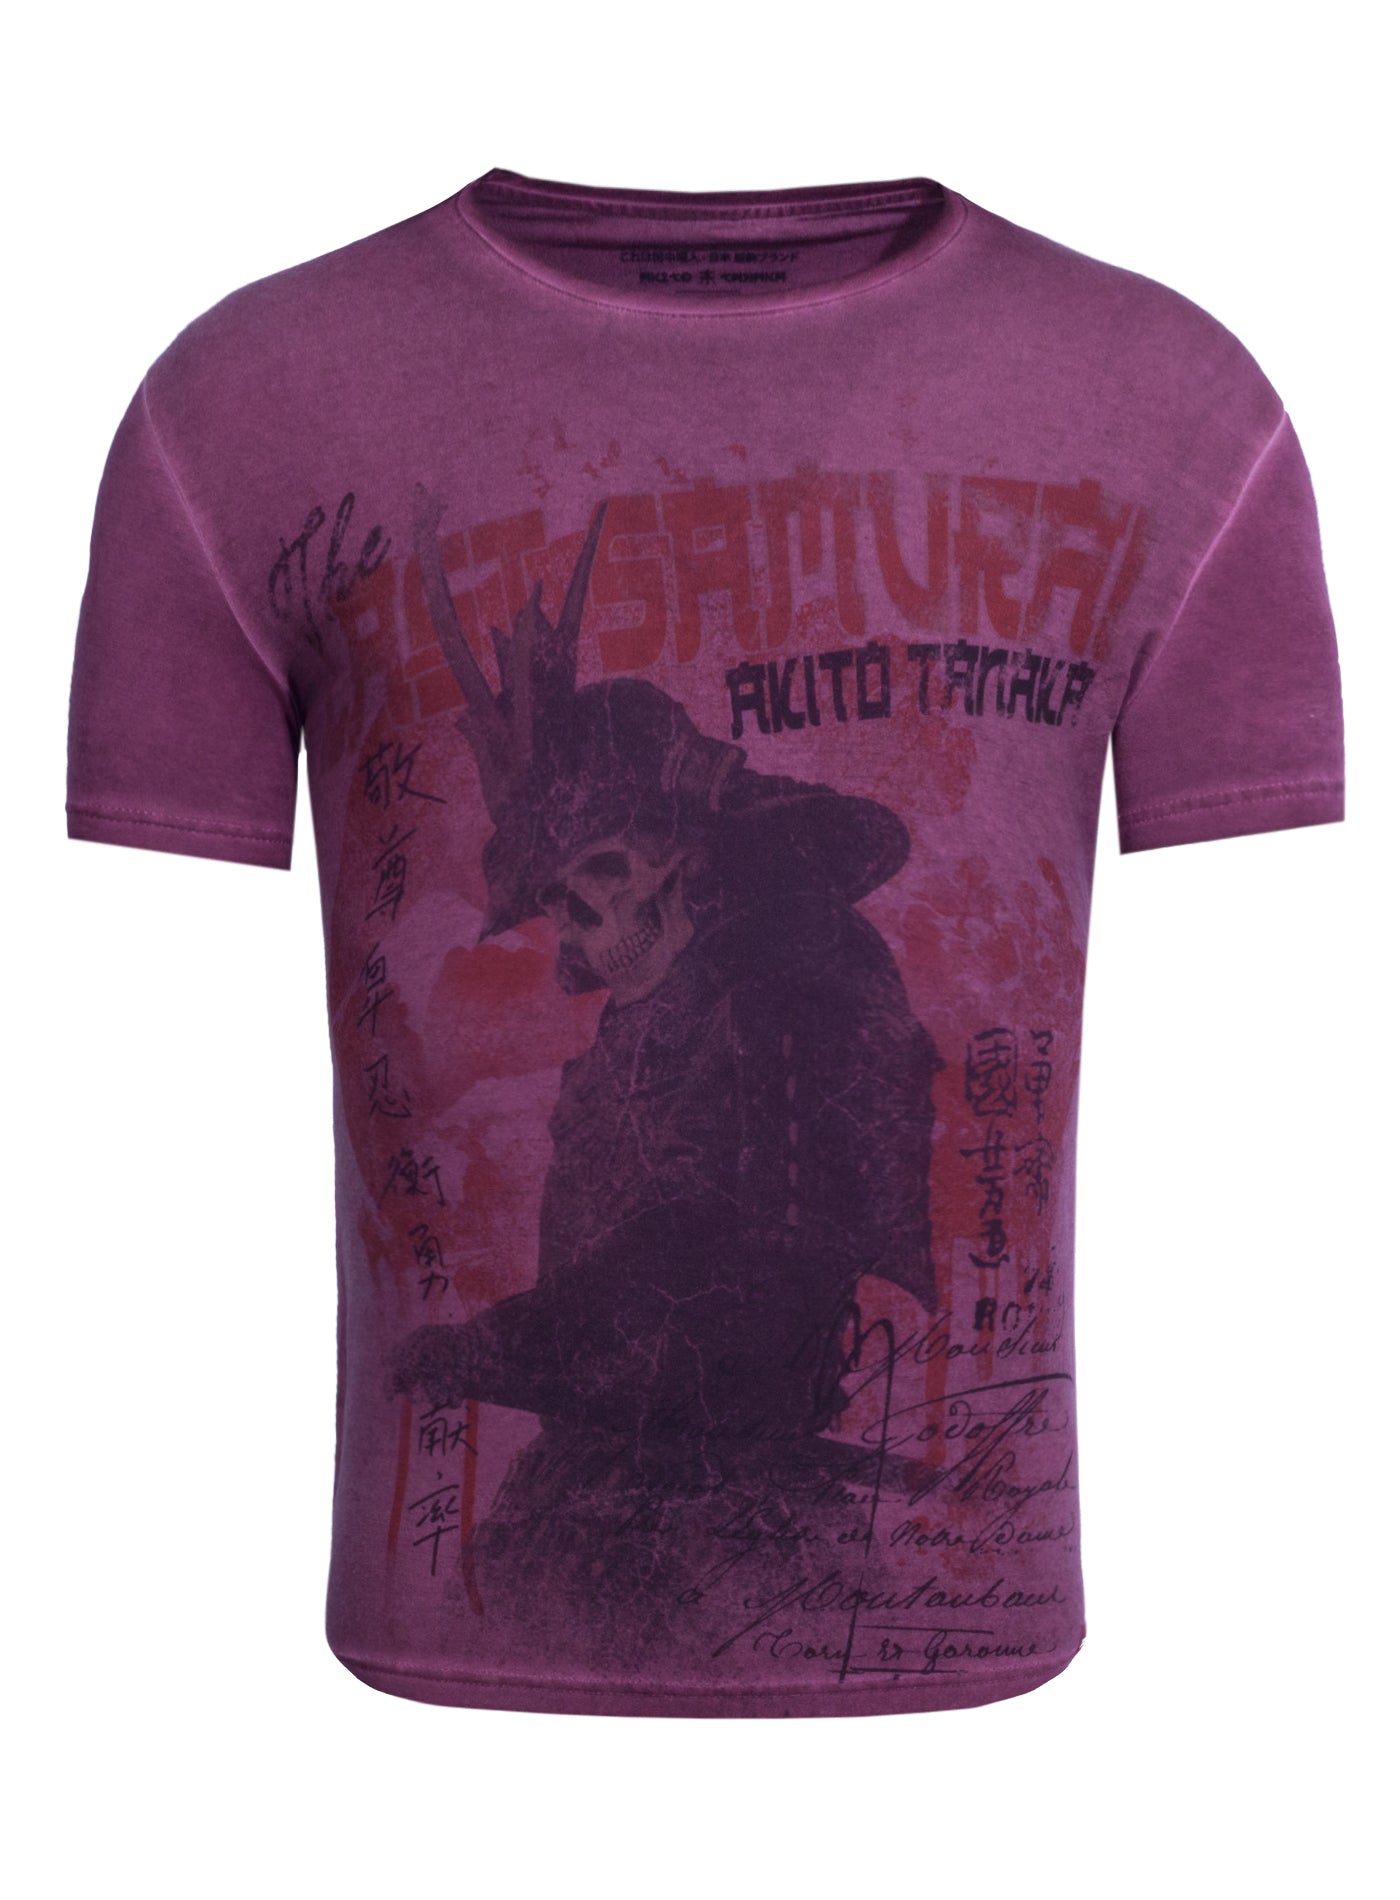 PrinT-Shirt mit Totenkopf Fotodruck Samurai Skull